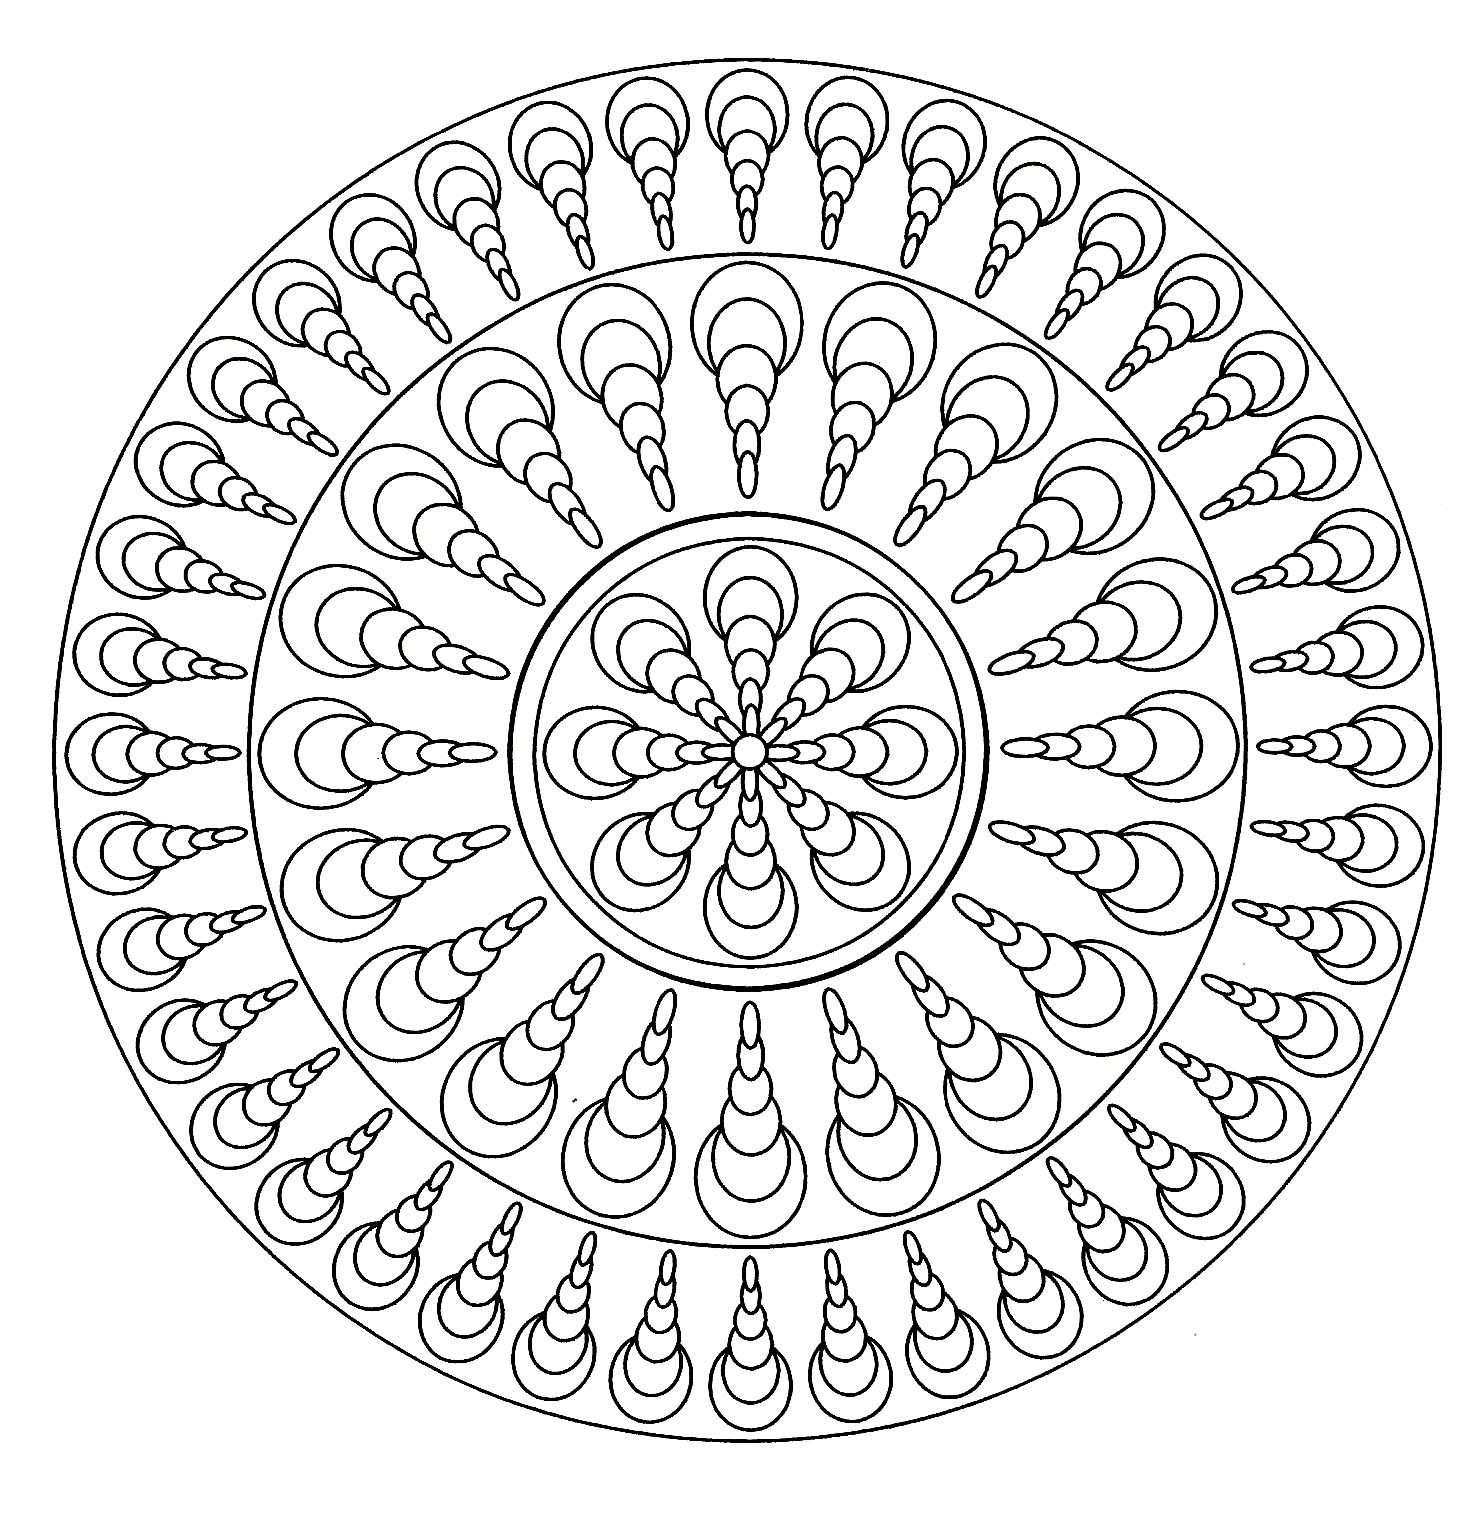 Mandala easy geometry - 4